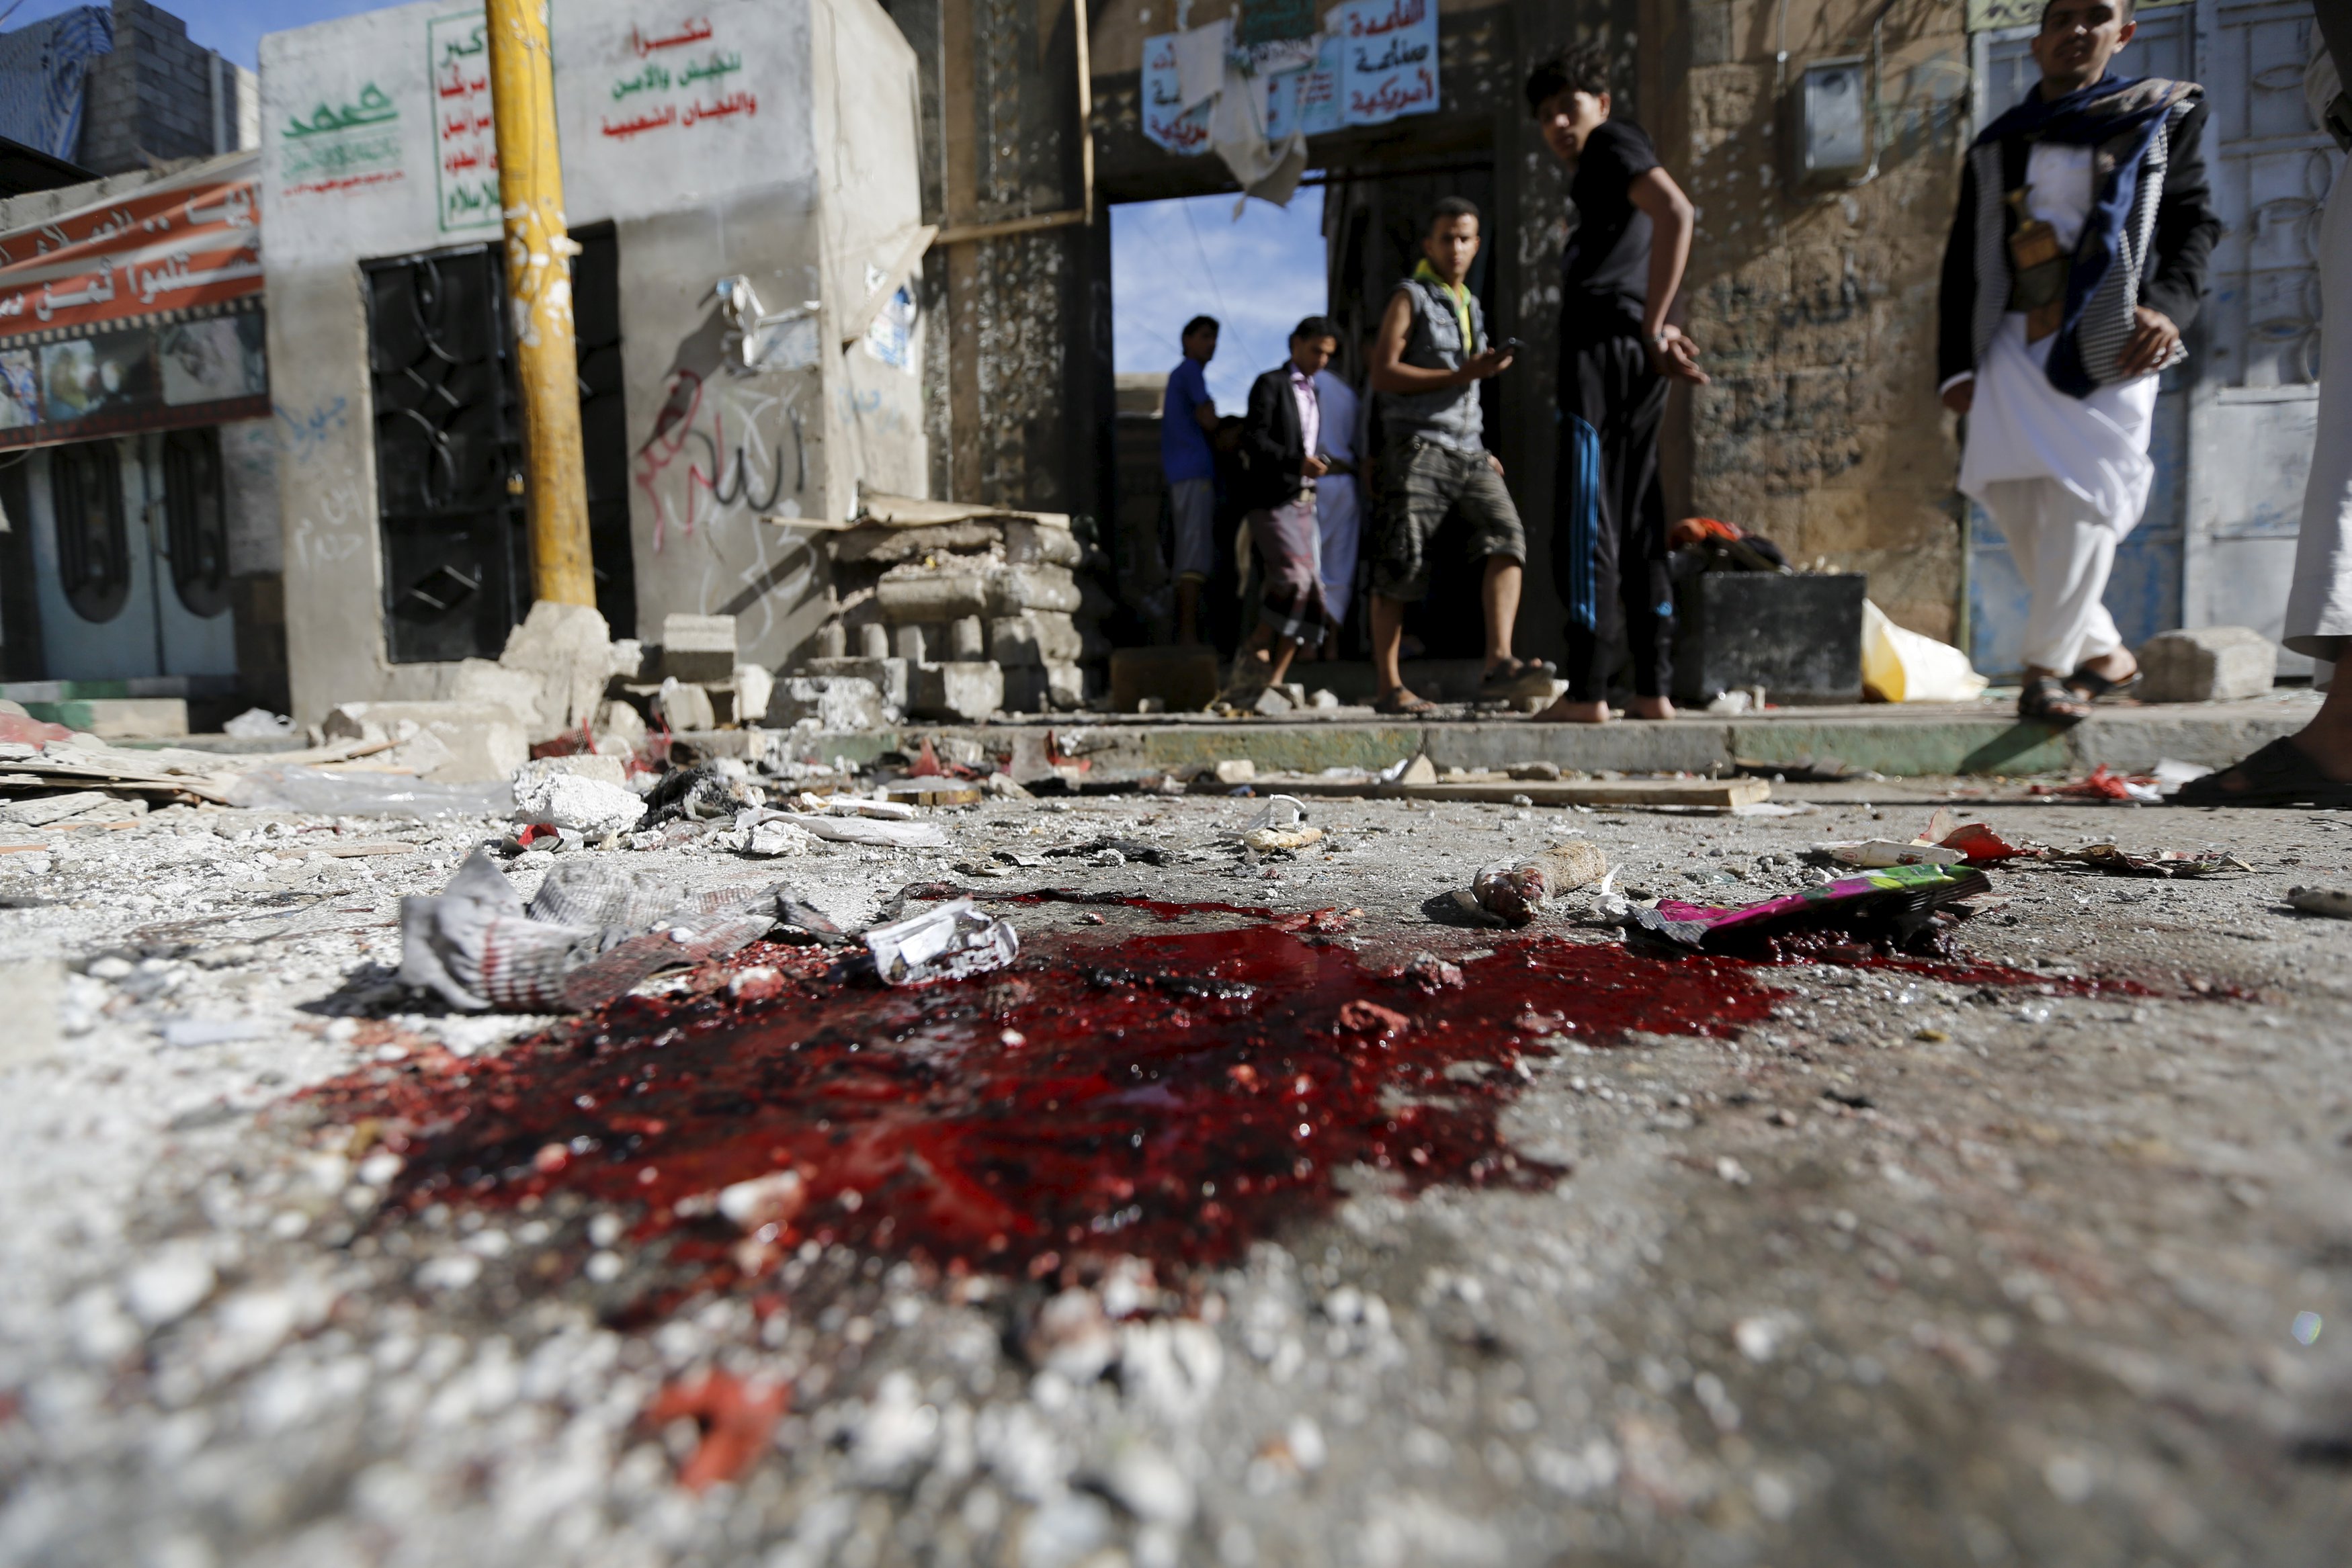 Атентат в джамия потопи в кръв байрама в Йемен (ВИДЕО)